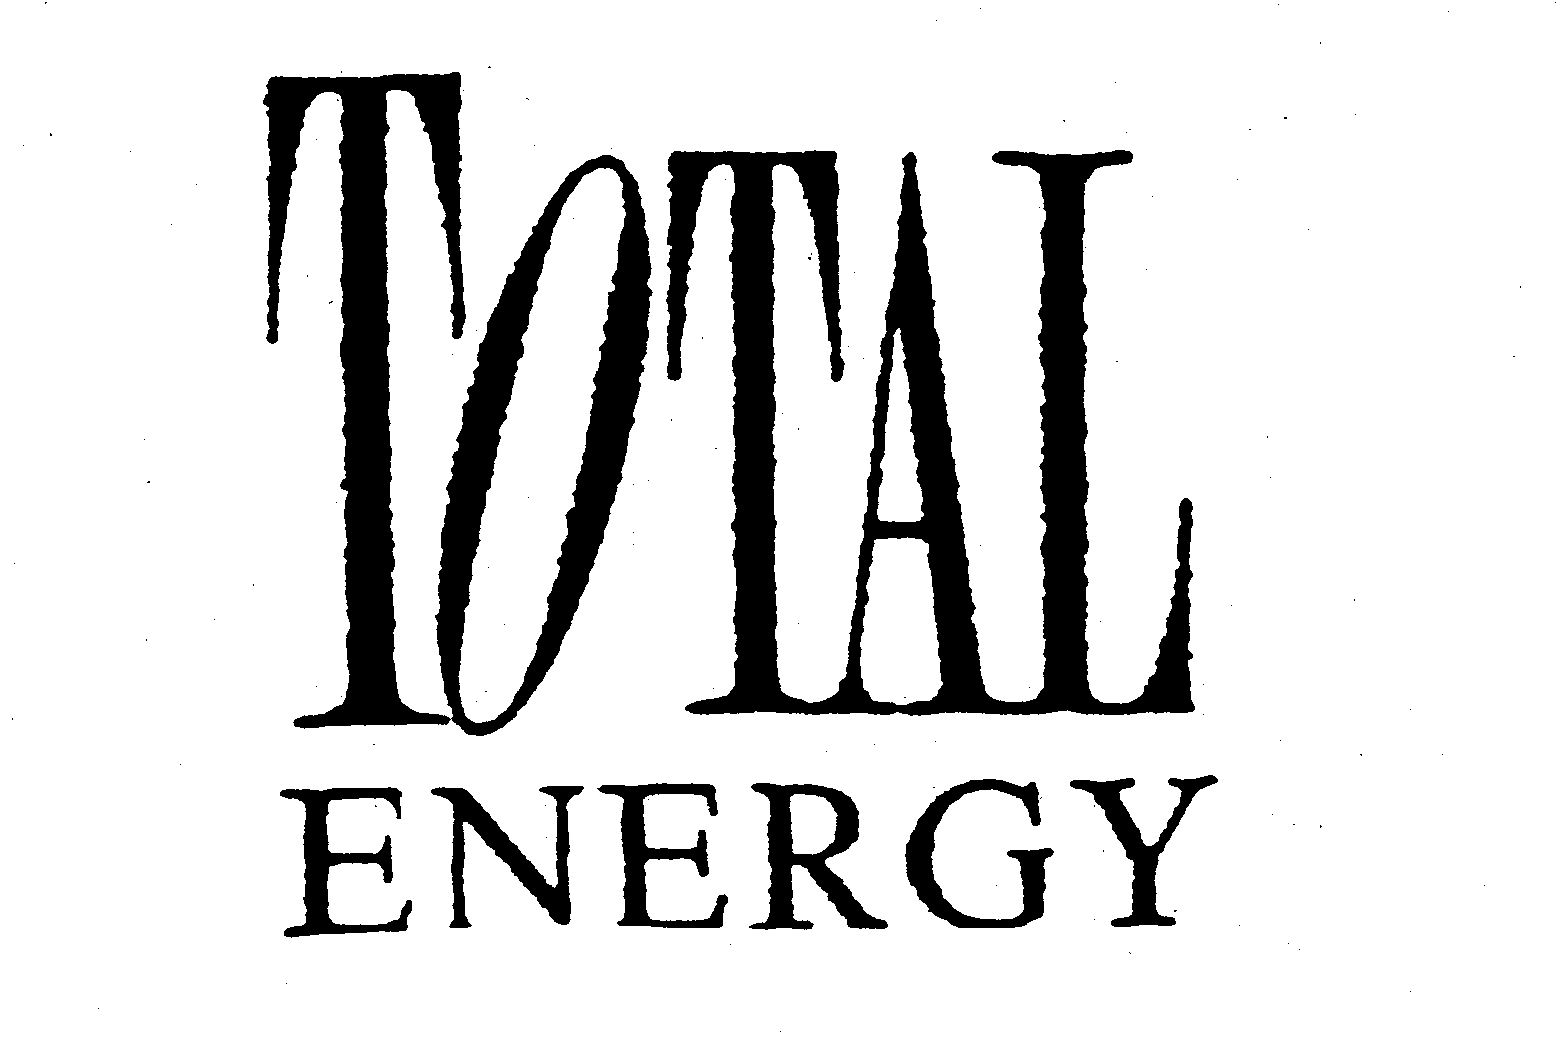 TOTAL ENERGY